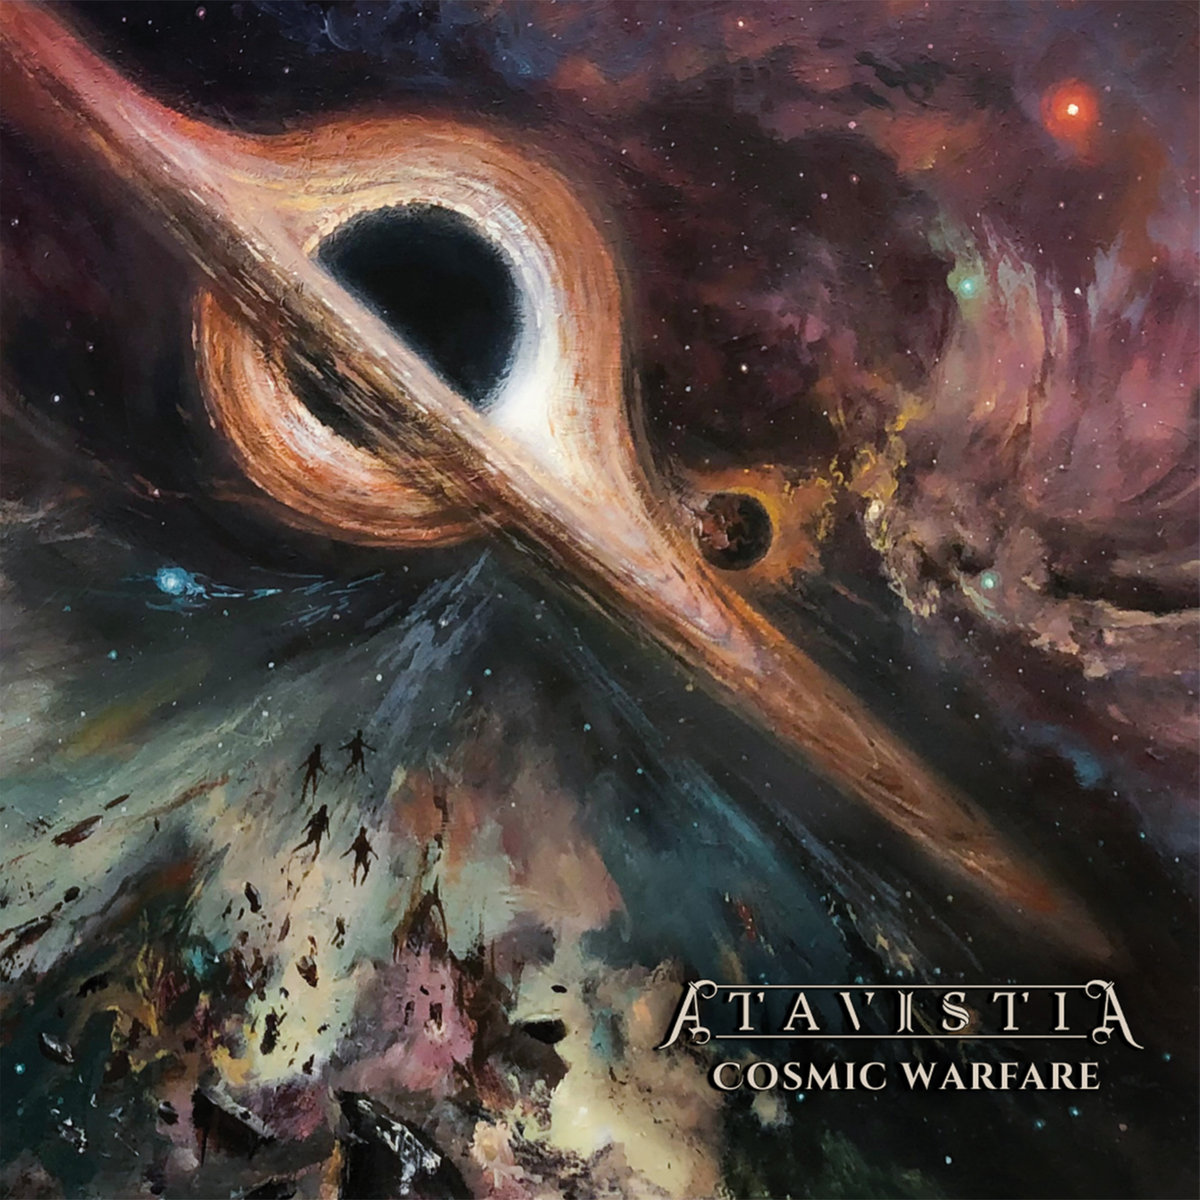 Atavistia Cosmic Warfare cover artwork